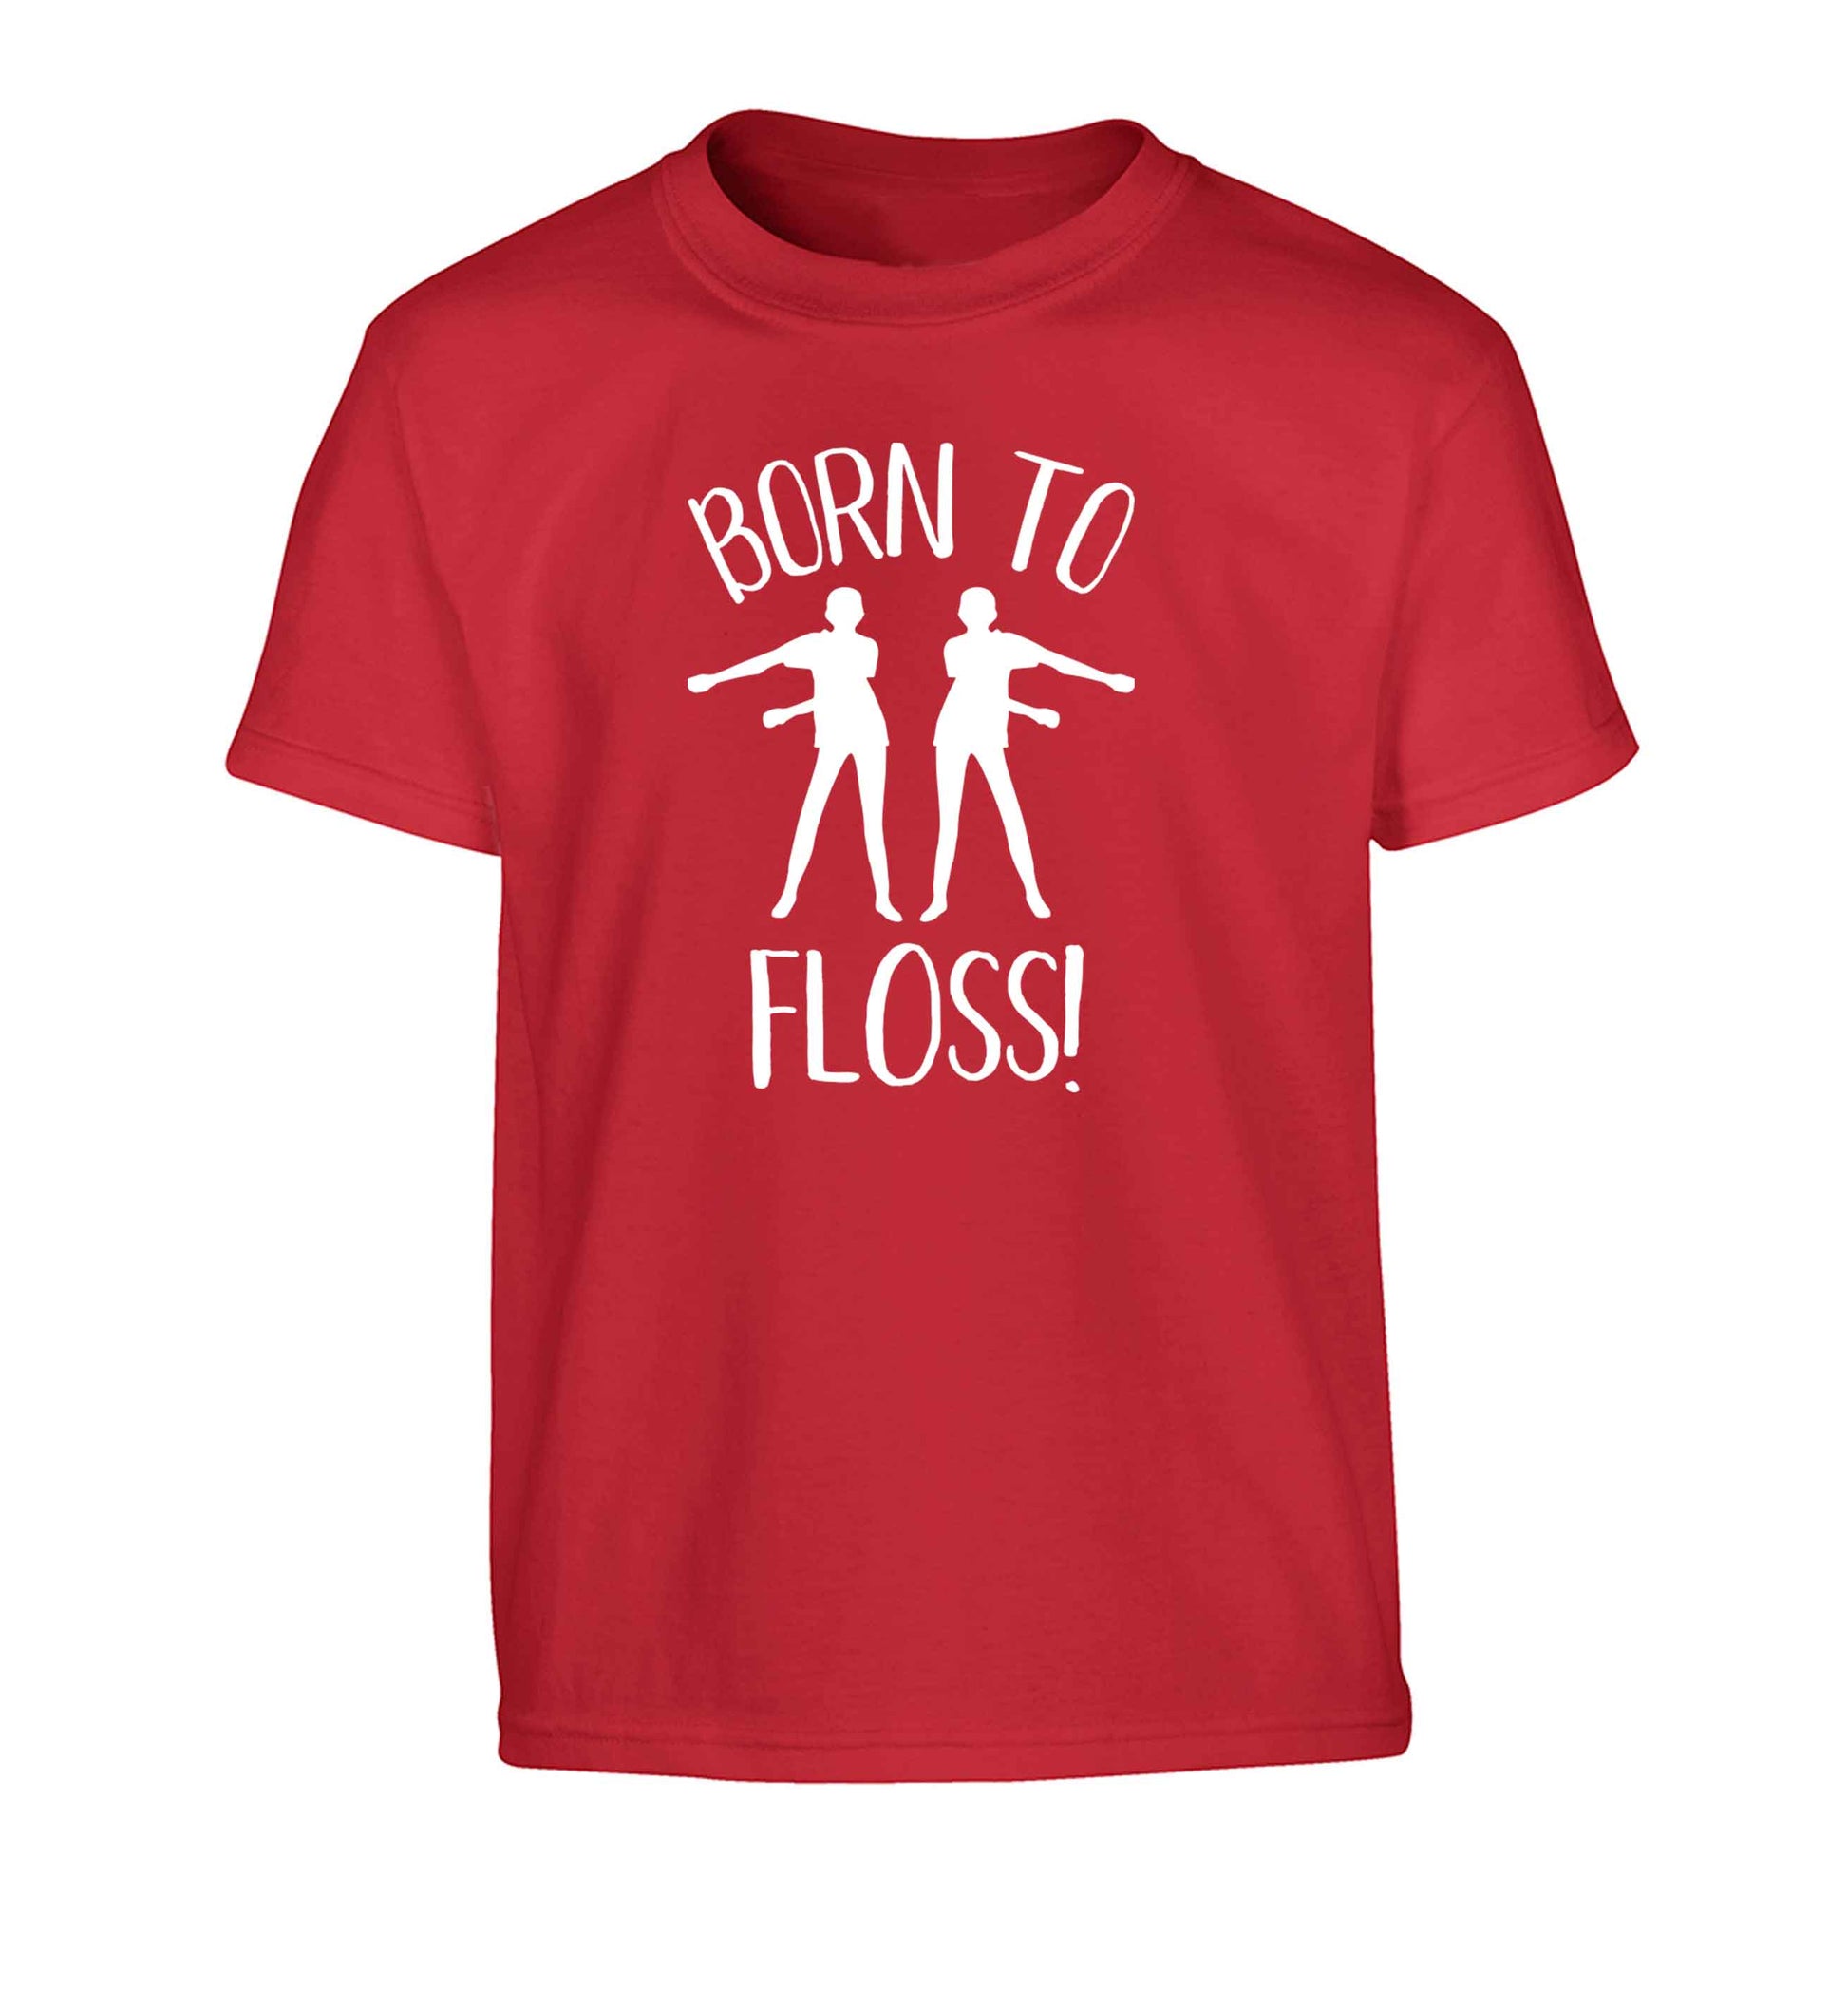 Born to floss Children's red Tshirt 12-13 Years